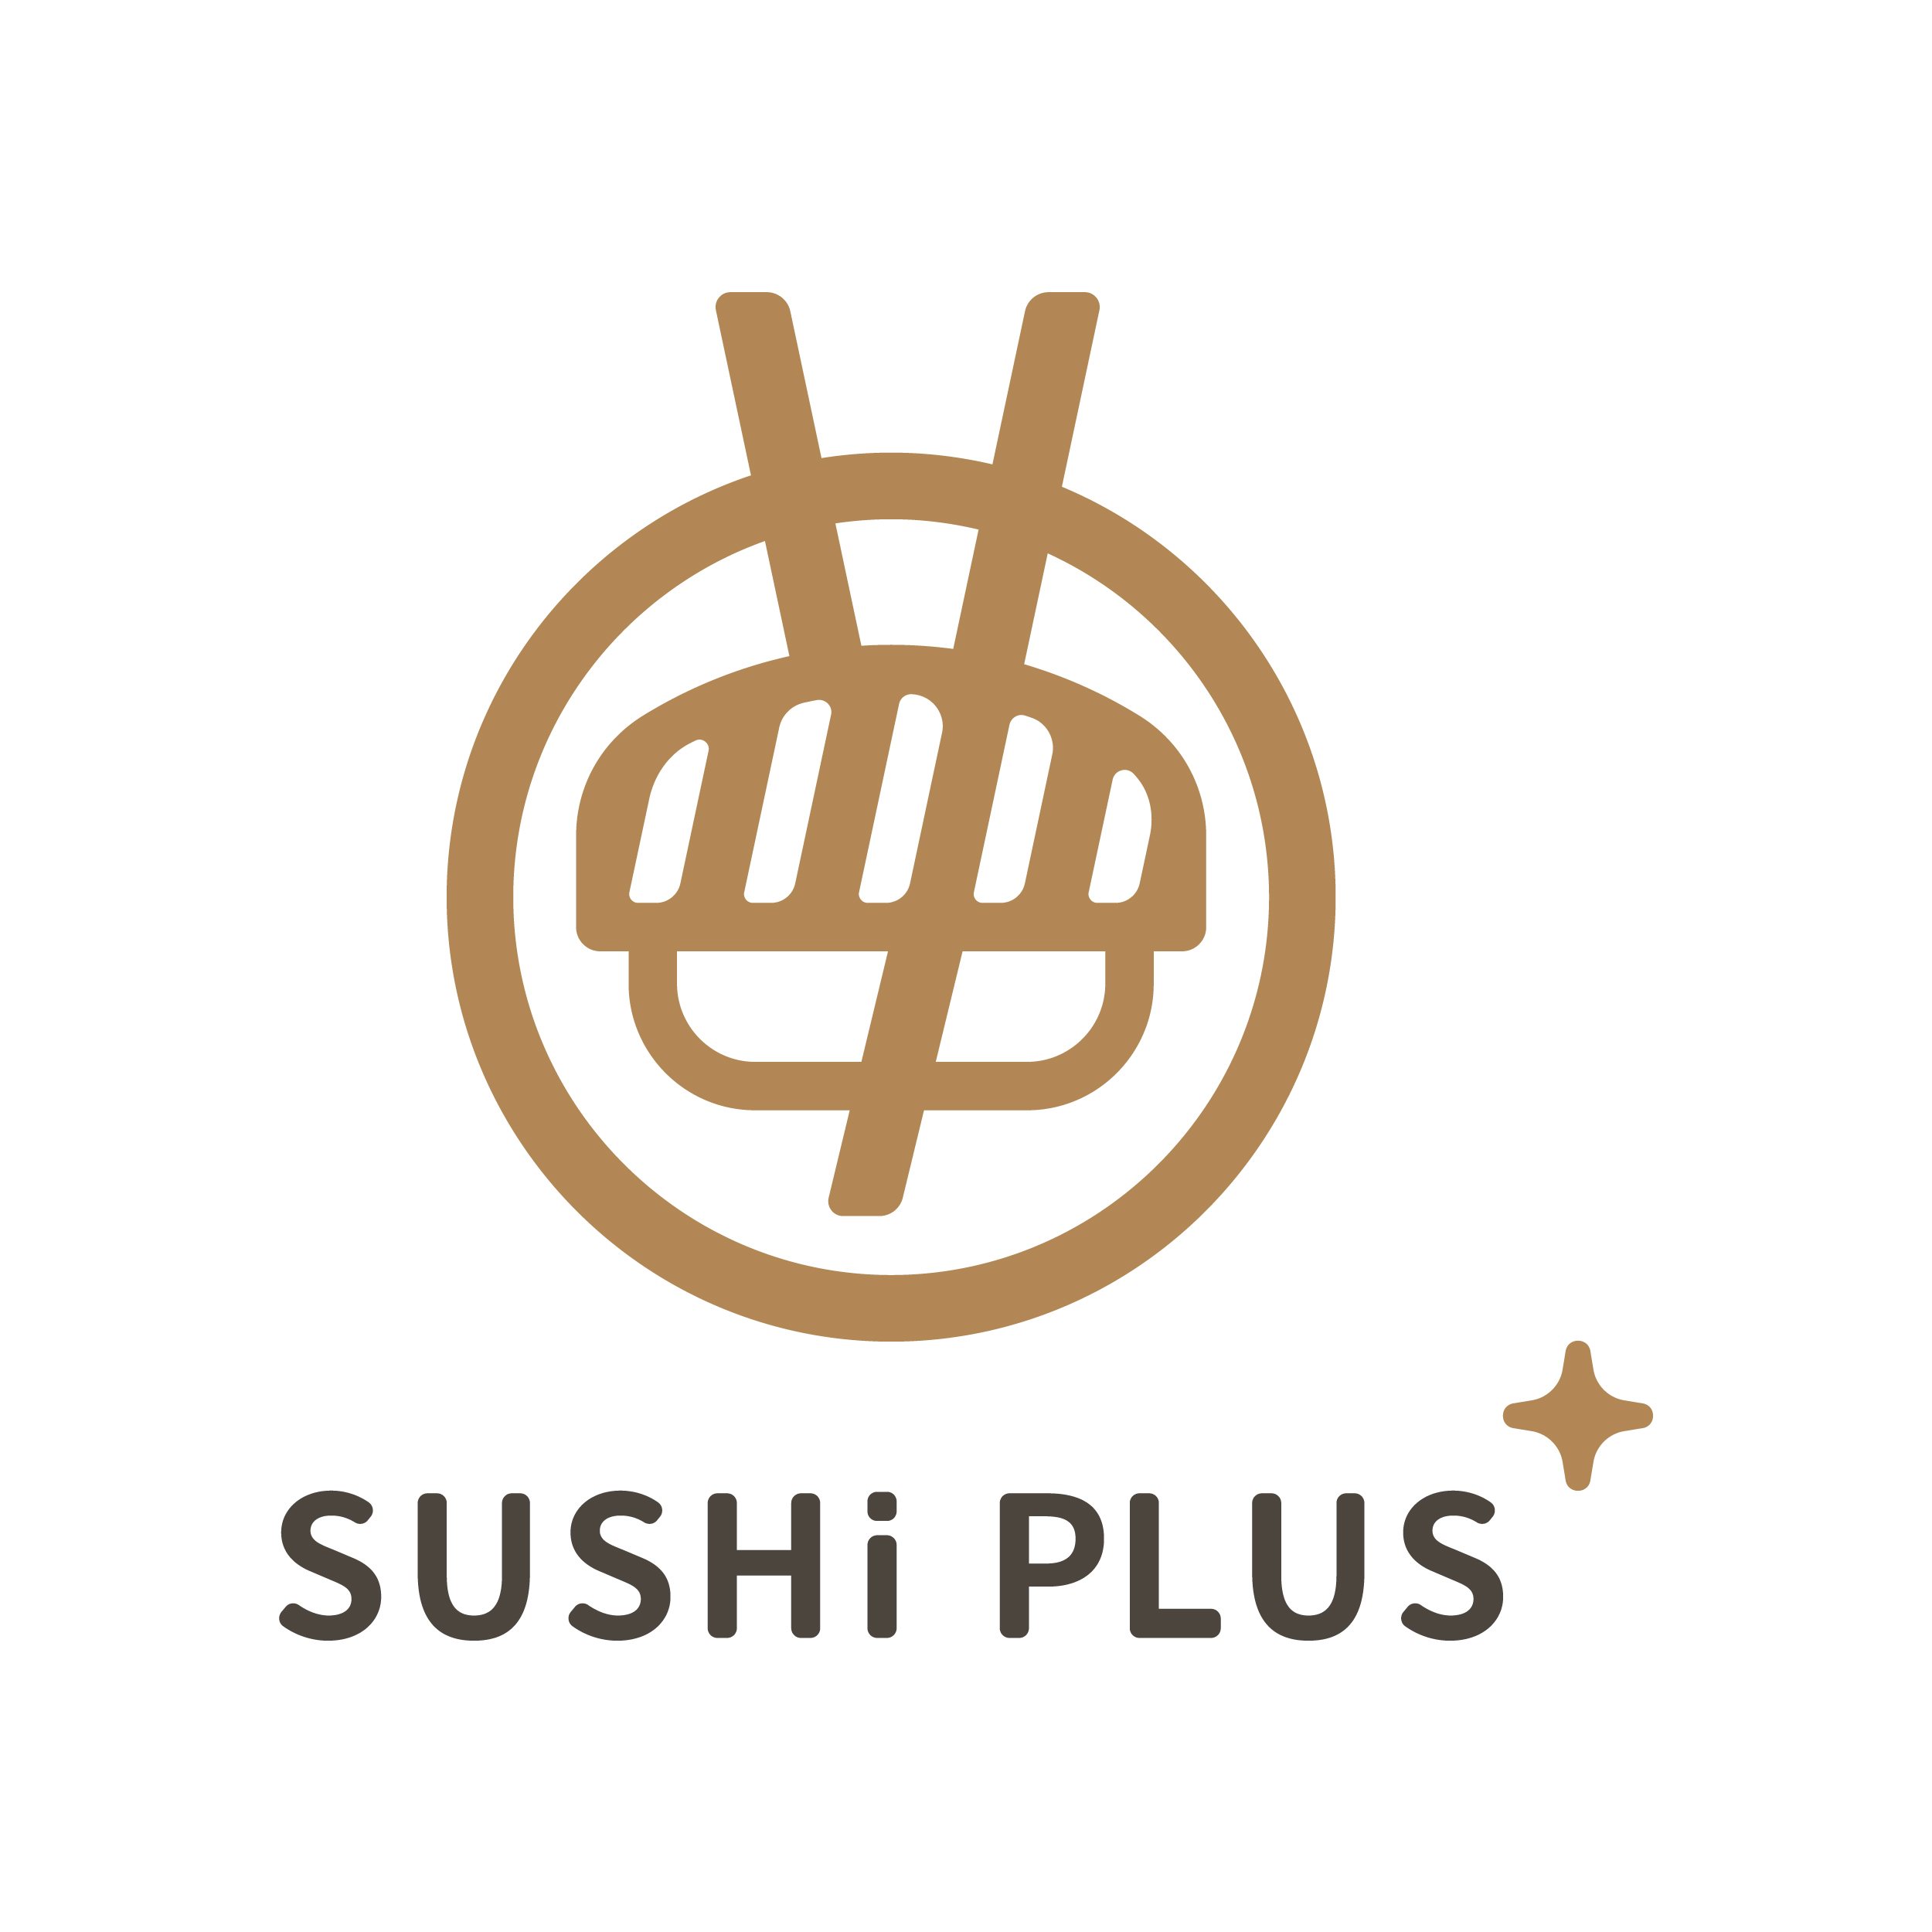 sushi plus logo_2500x2500.jpg